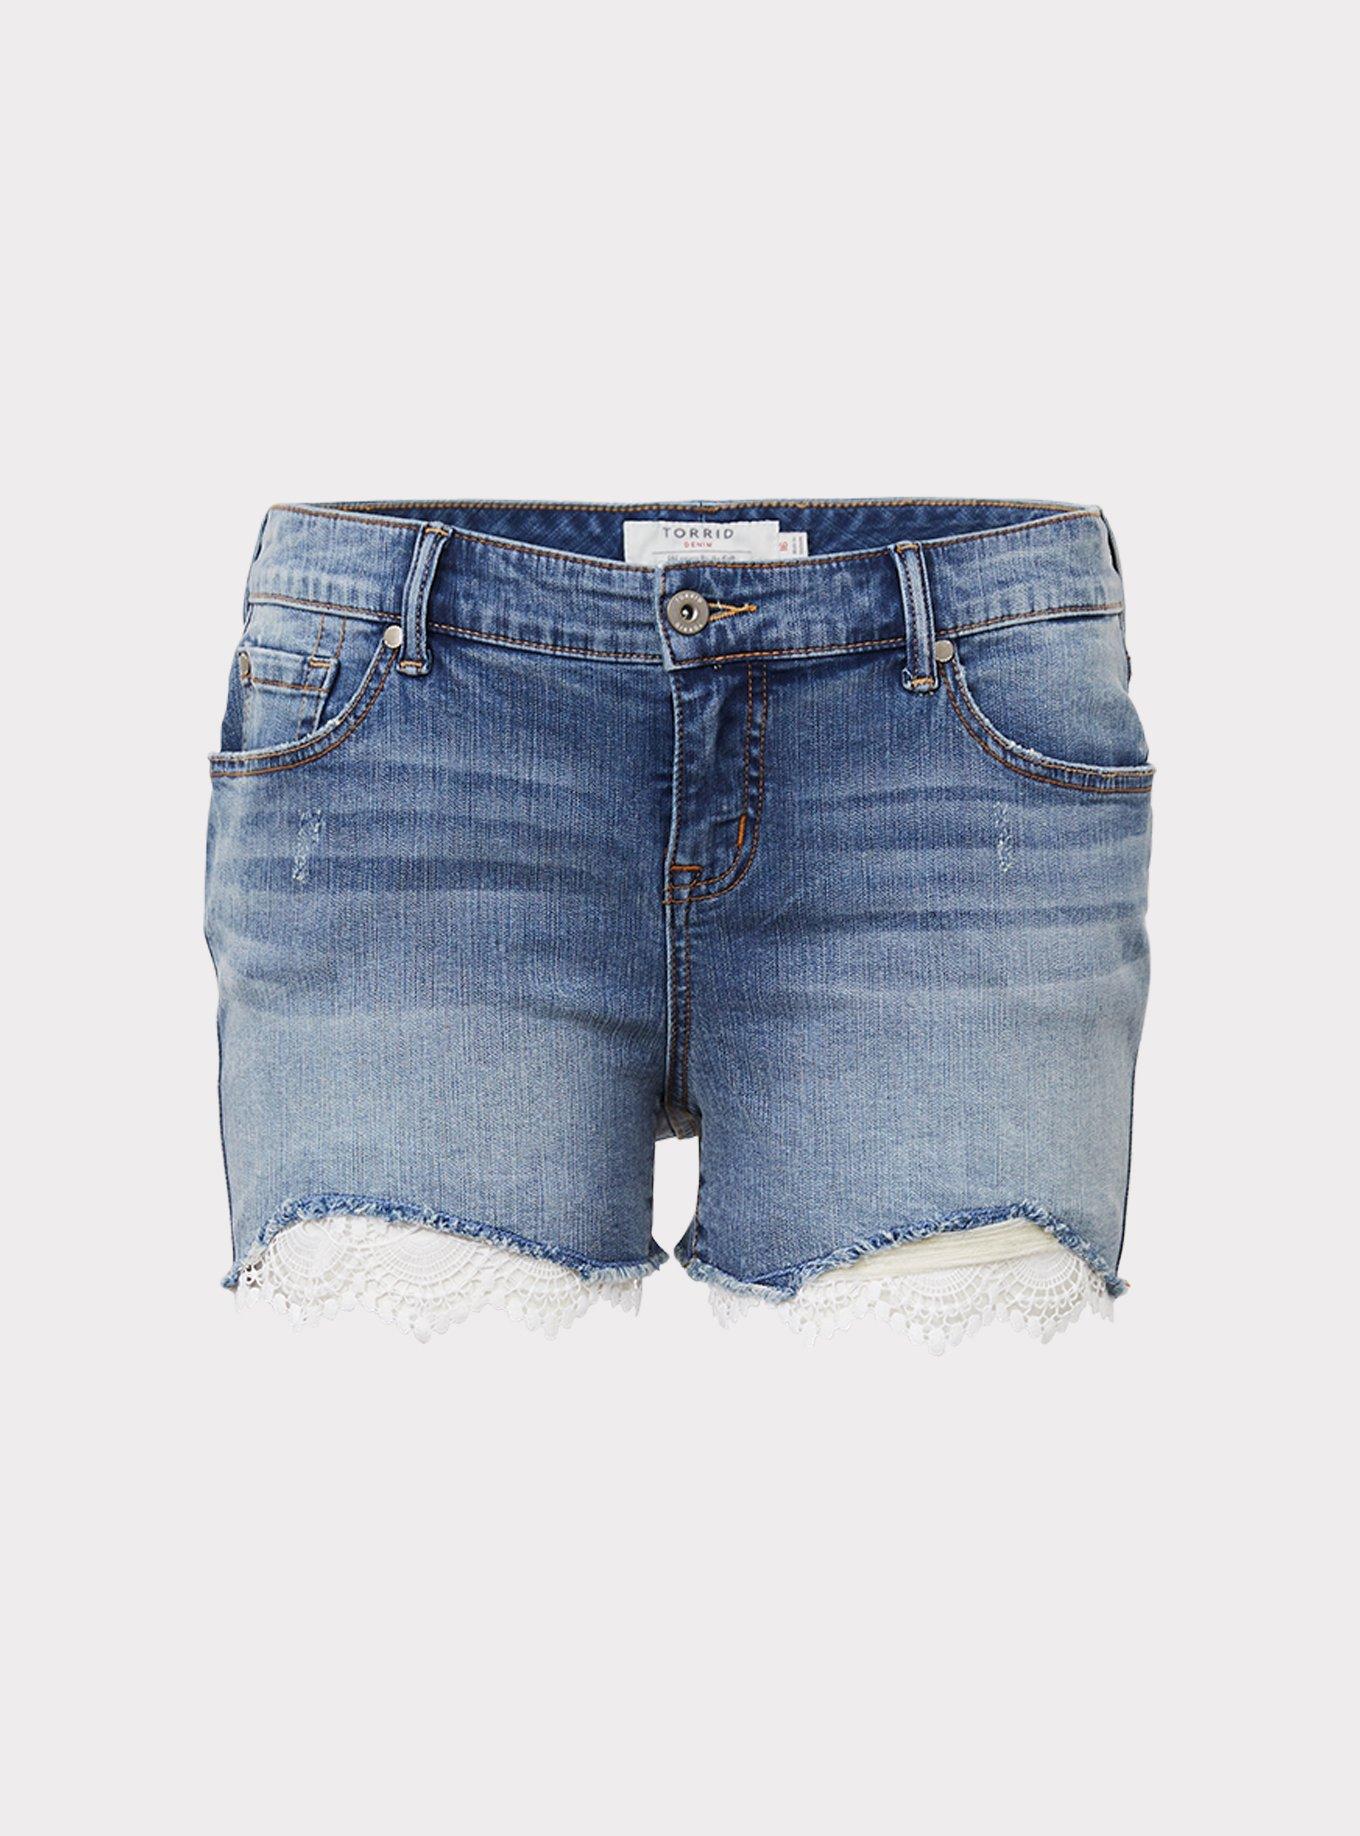 Buy Blue Cheeky Shorts - Size Large Online UK